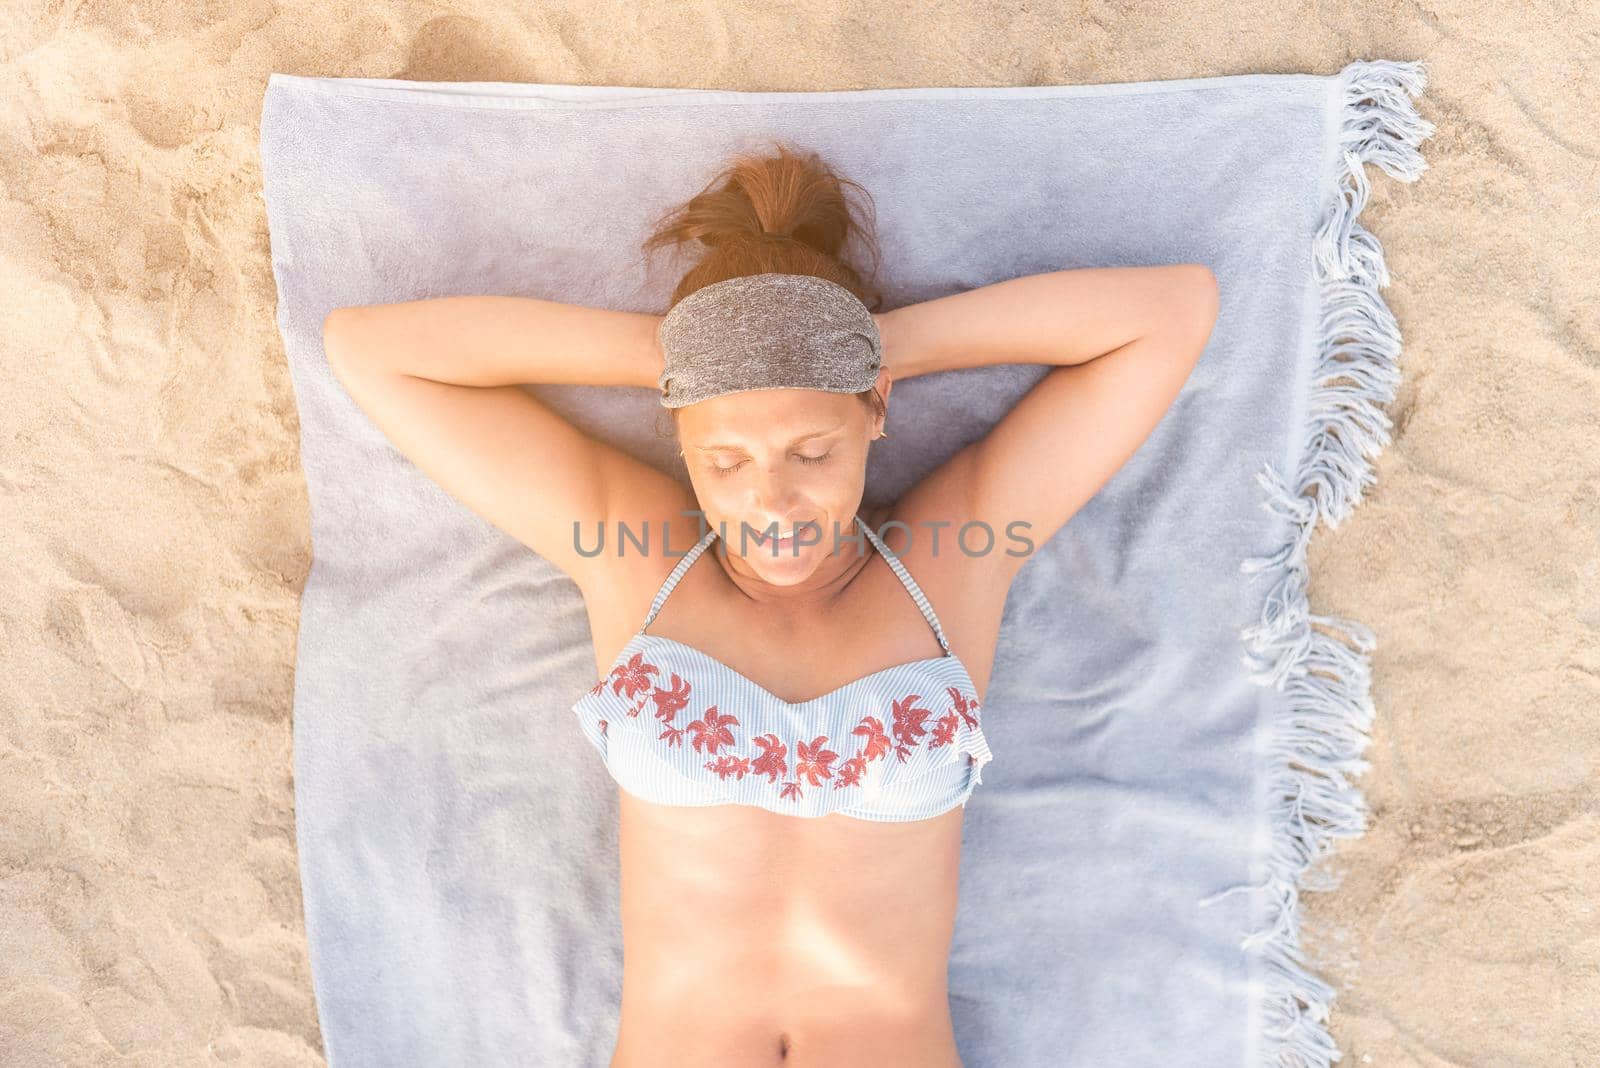 Smiling woman in swimwear sunbathing on beach by ivanmoreno